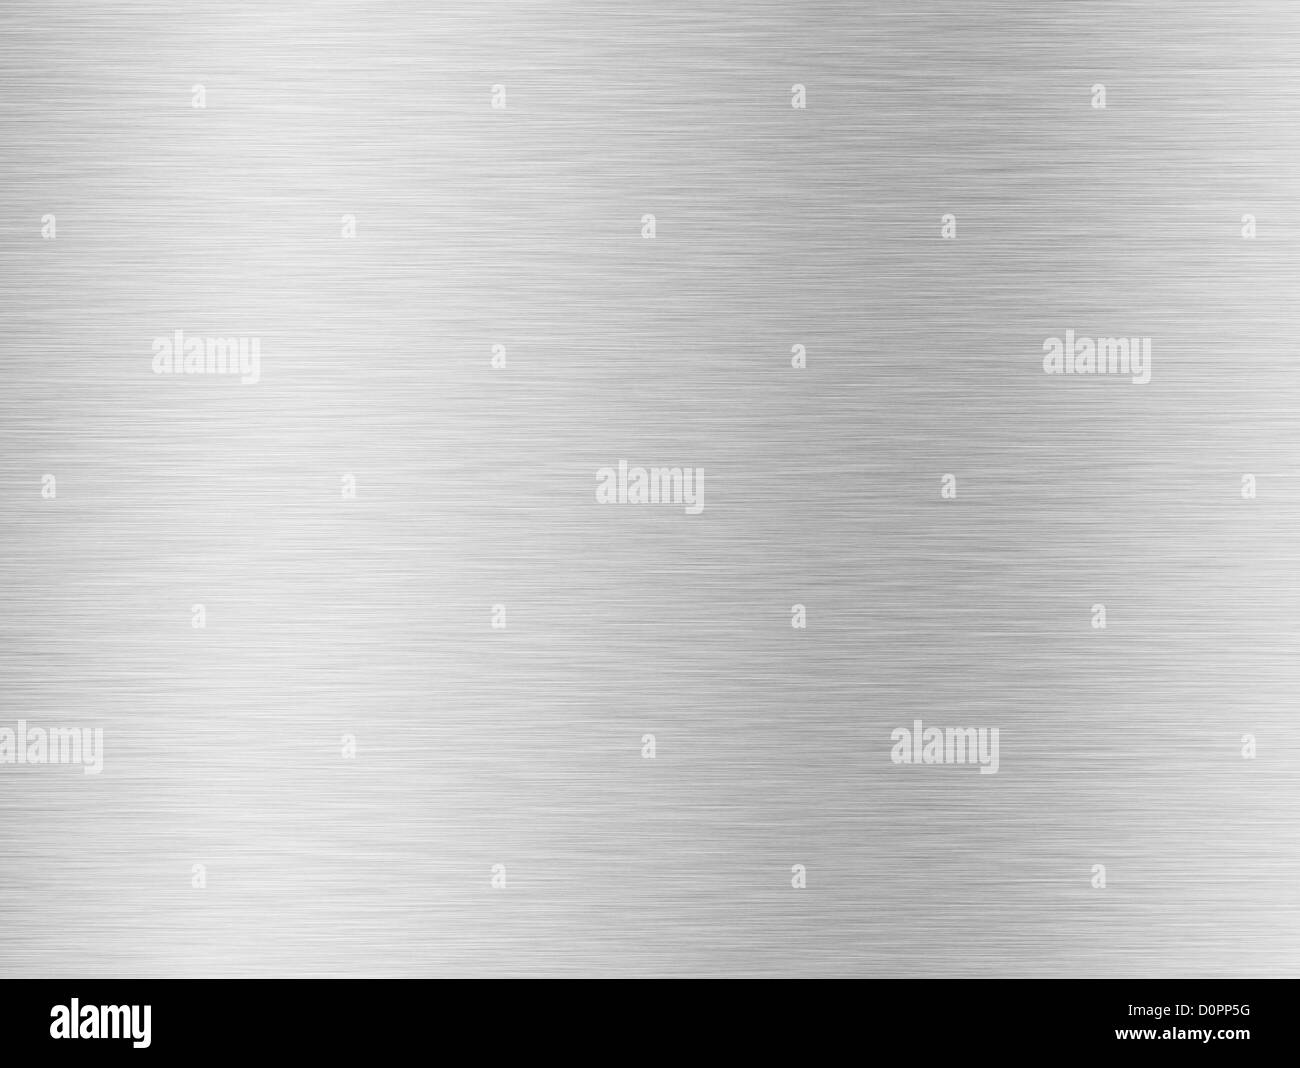 brushed silver metallic background Stock Photo - Alamy